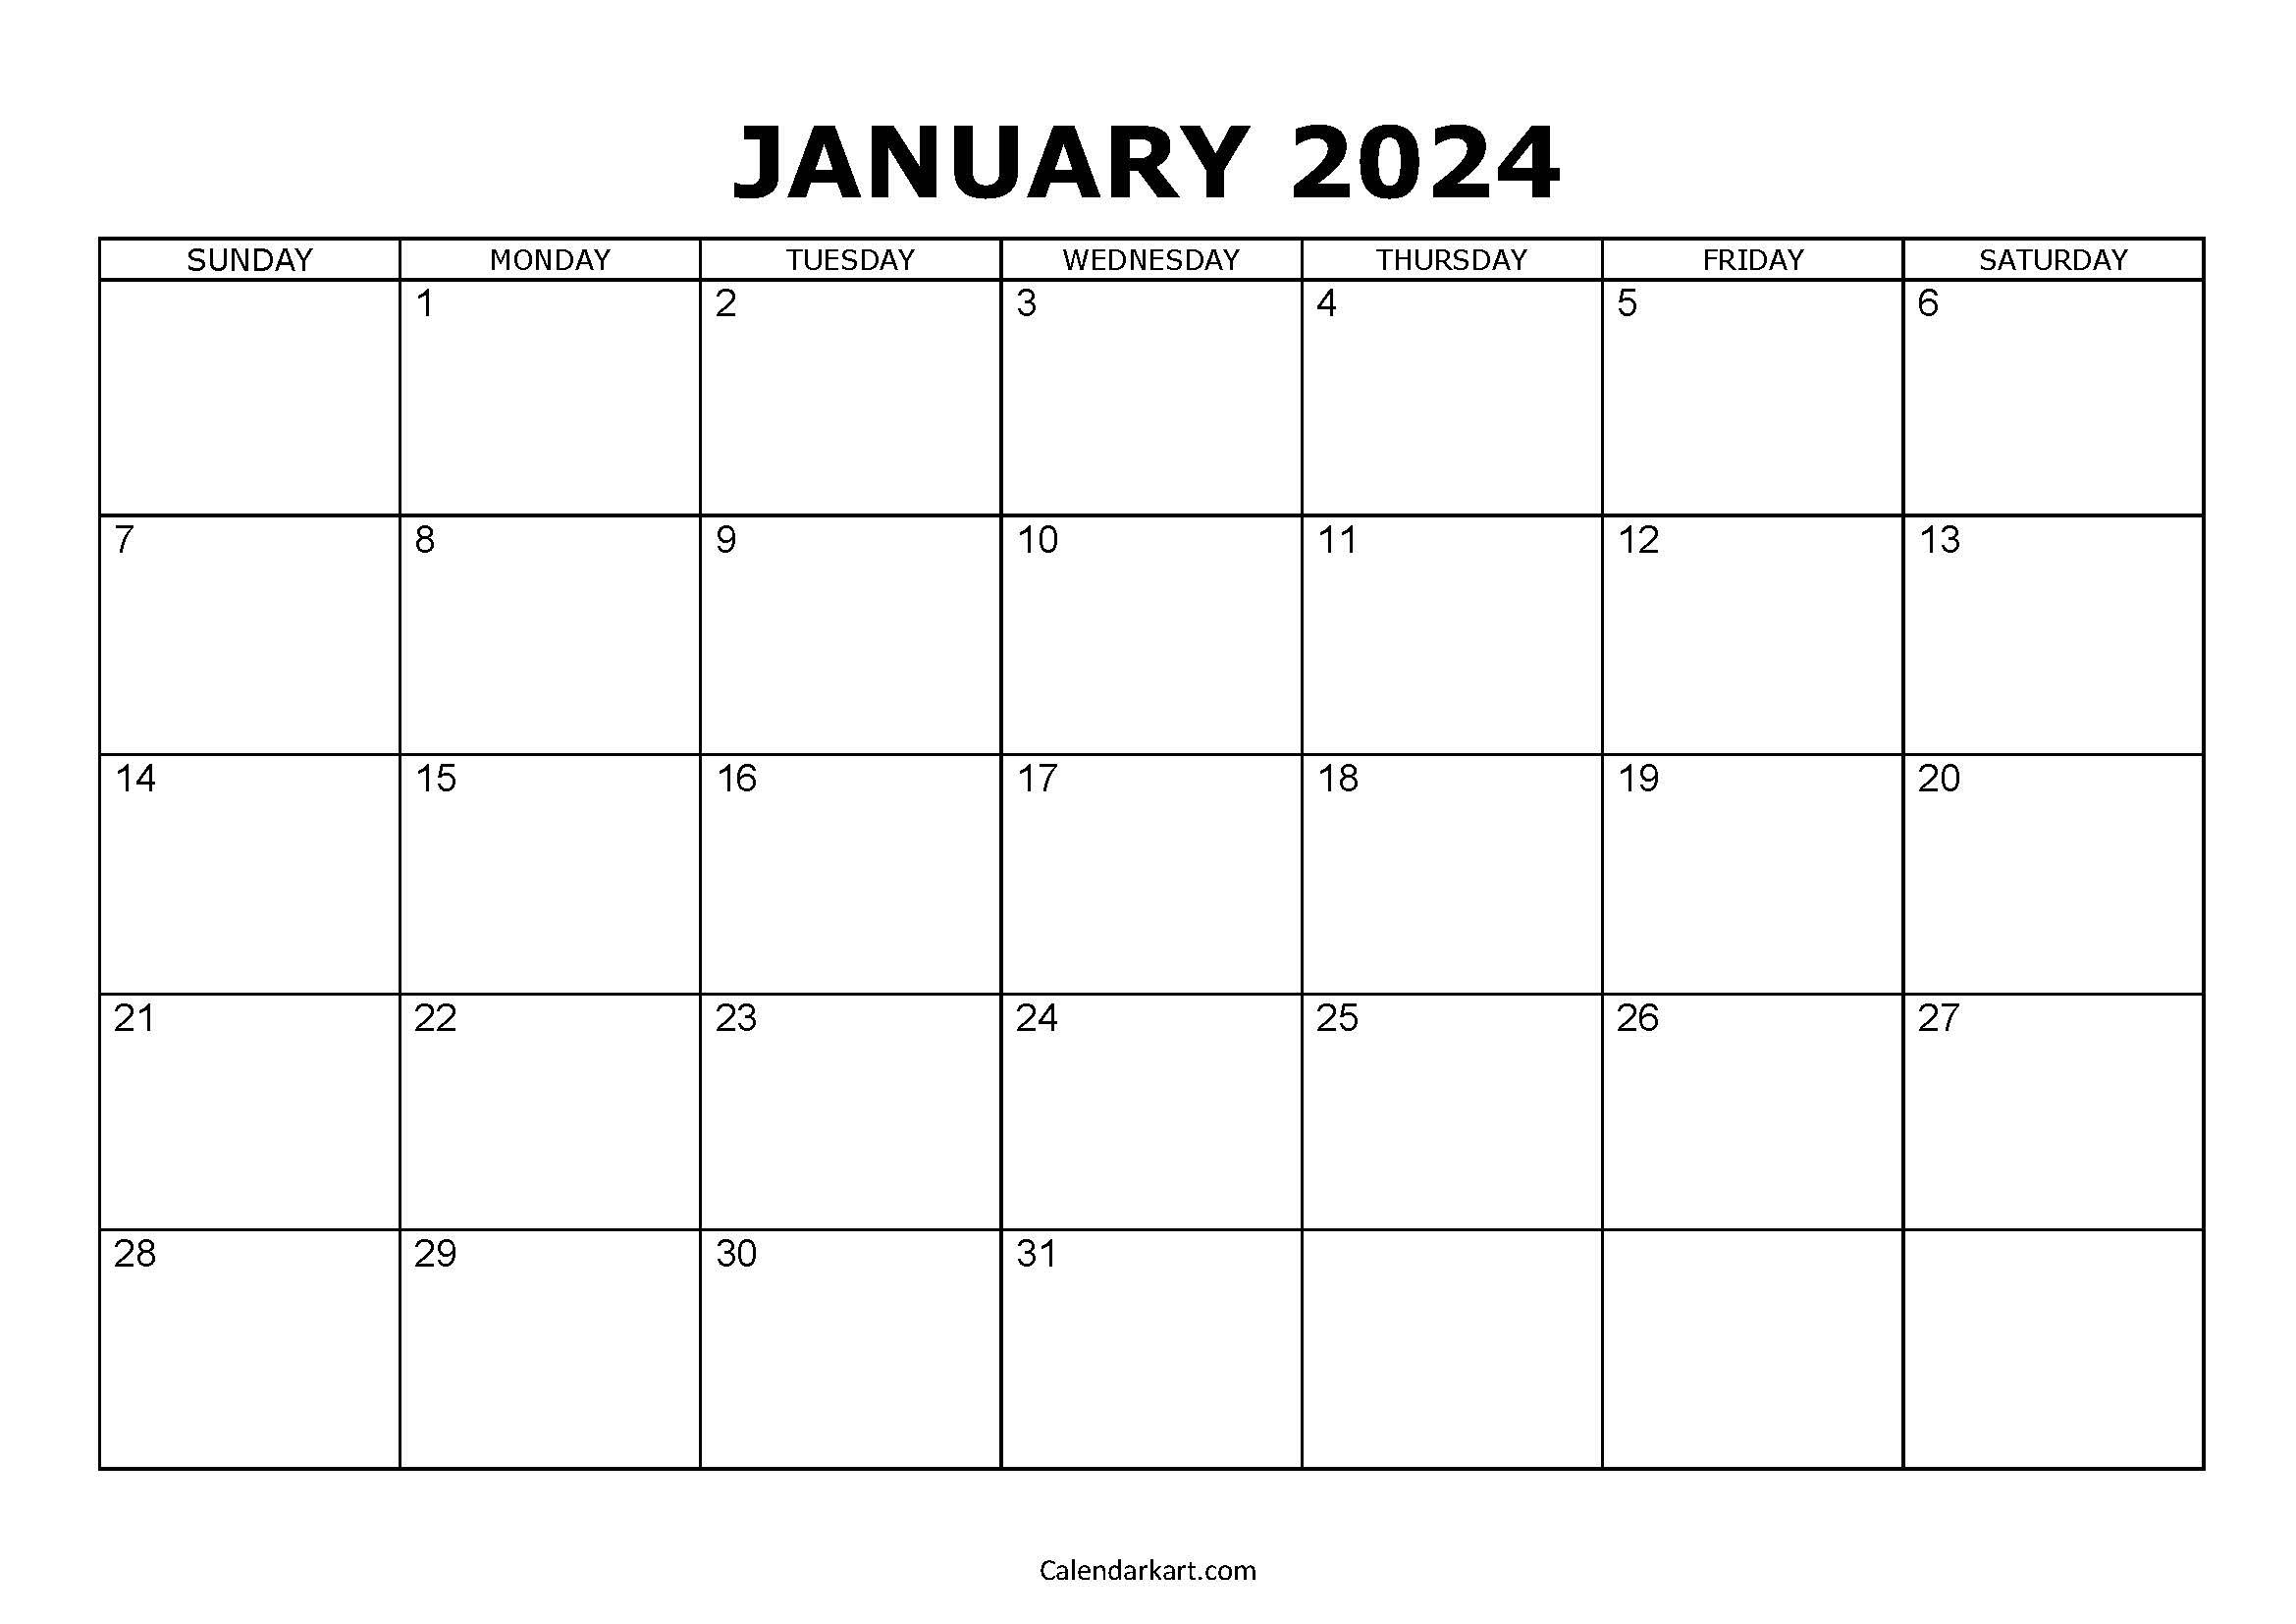 Free Printable January 2024 Calendars - Calendarkart inside Free Printable Calendar 2024 January